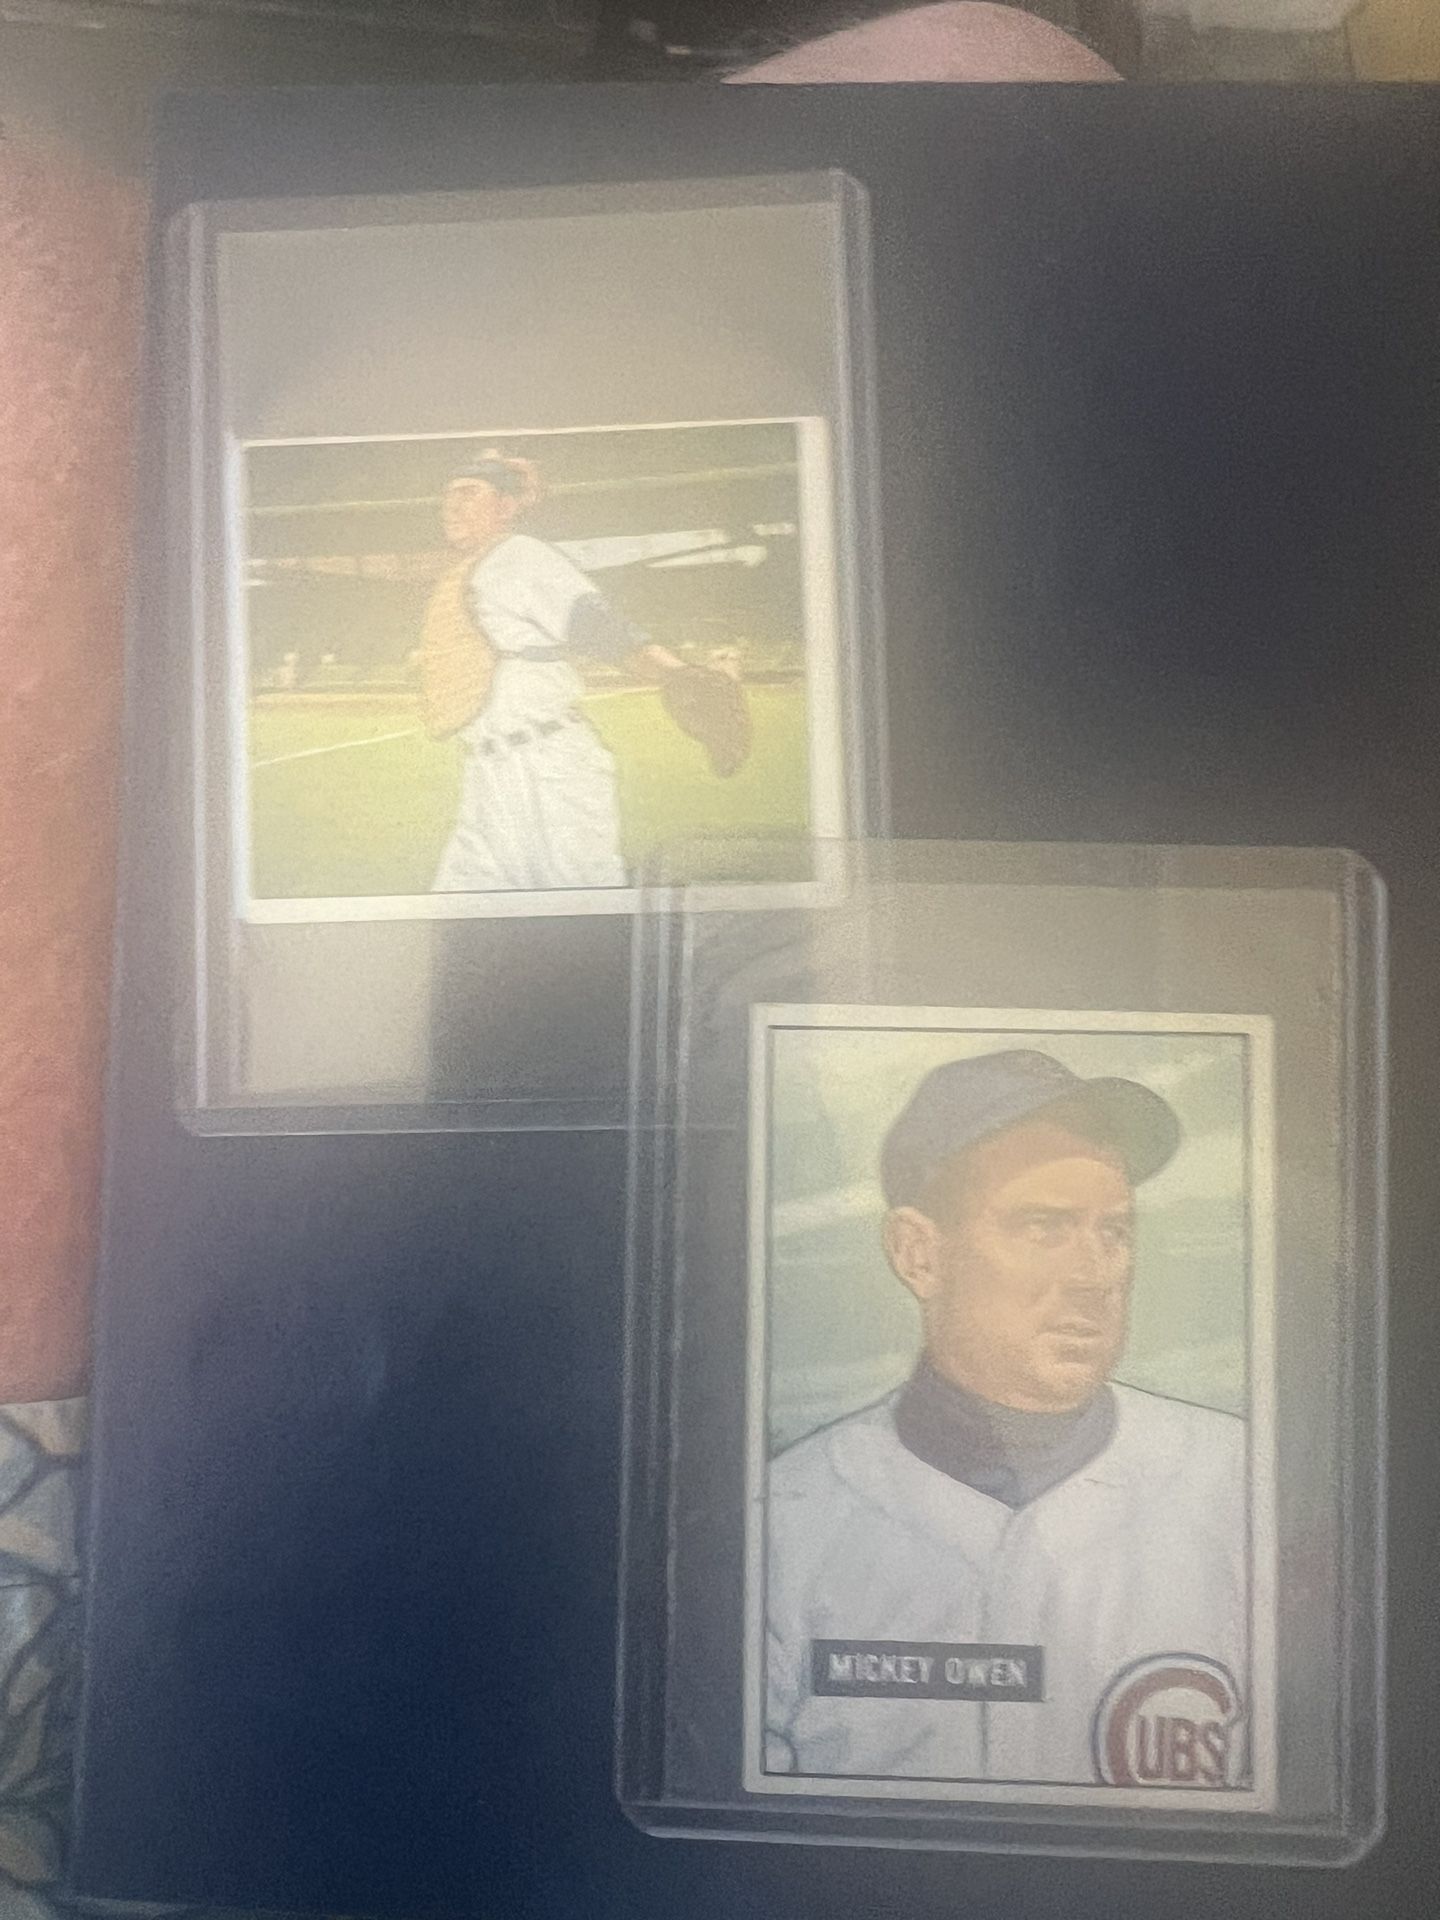 1950 & 1951 Bowman Baseball Cards Of Mickey Owen